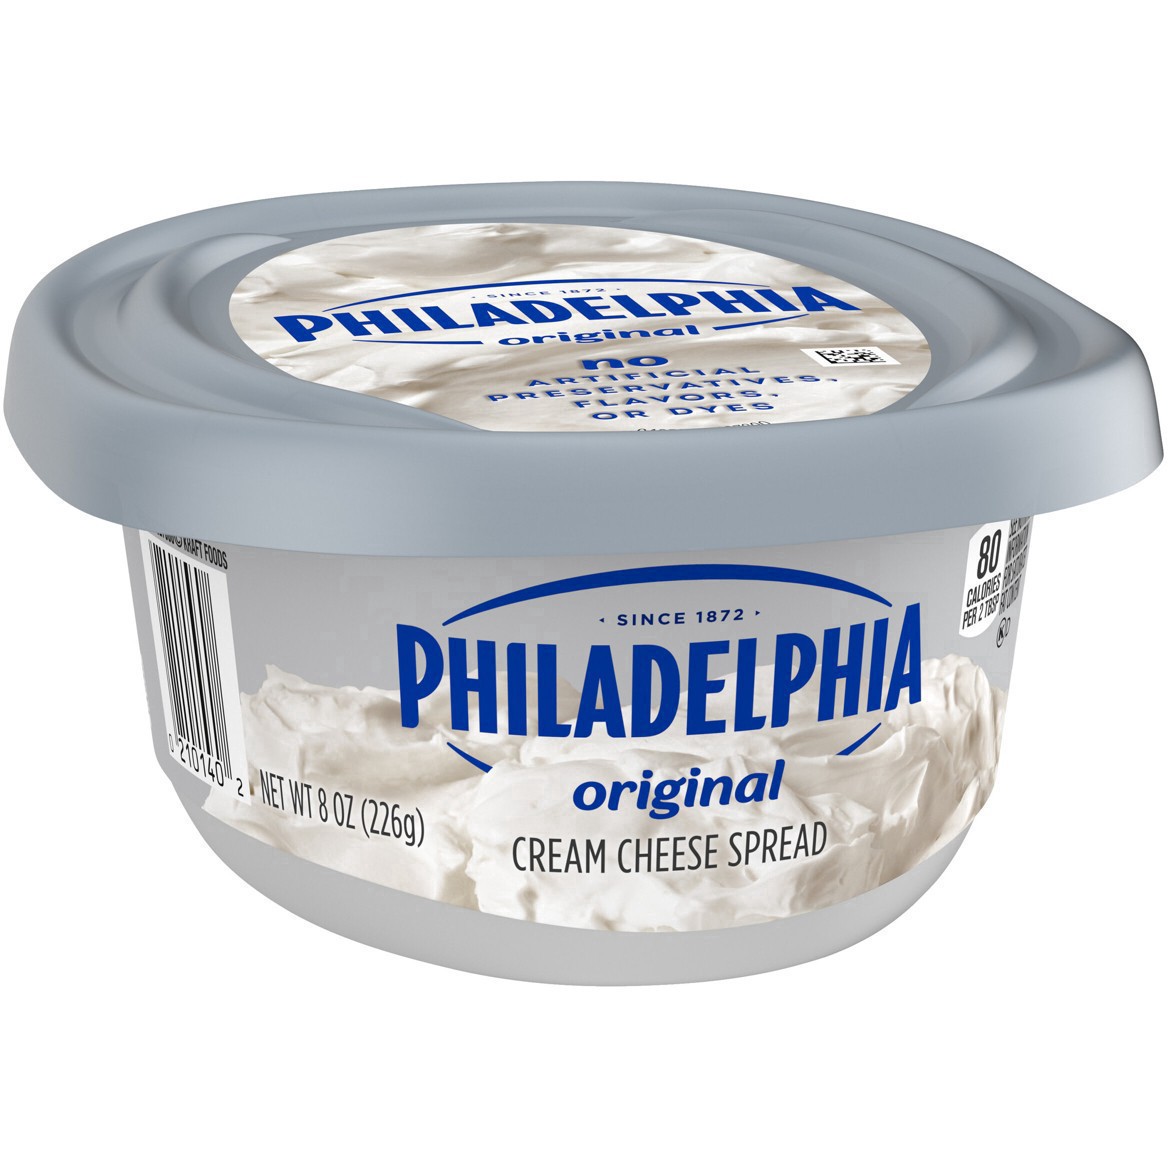 slide 27 of 67, Philadelphia Original Cream Cheese Spread, 8 oz